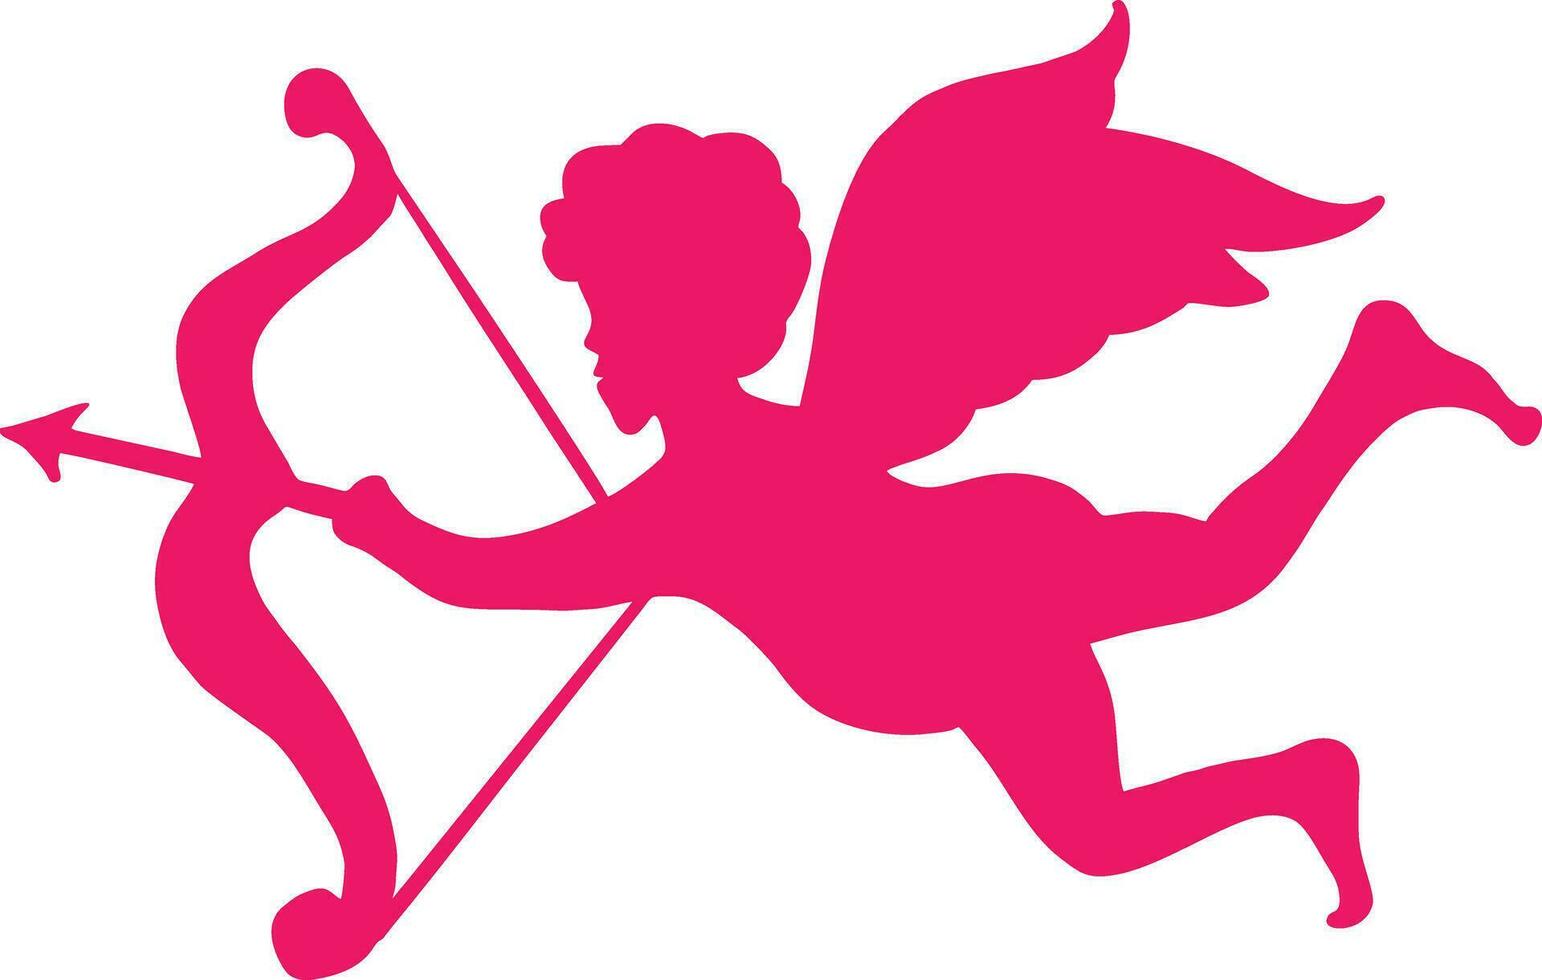 Cupidon silhouette vecteur illustration